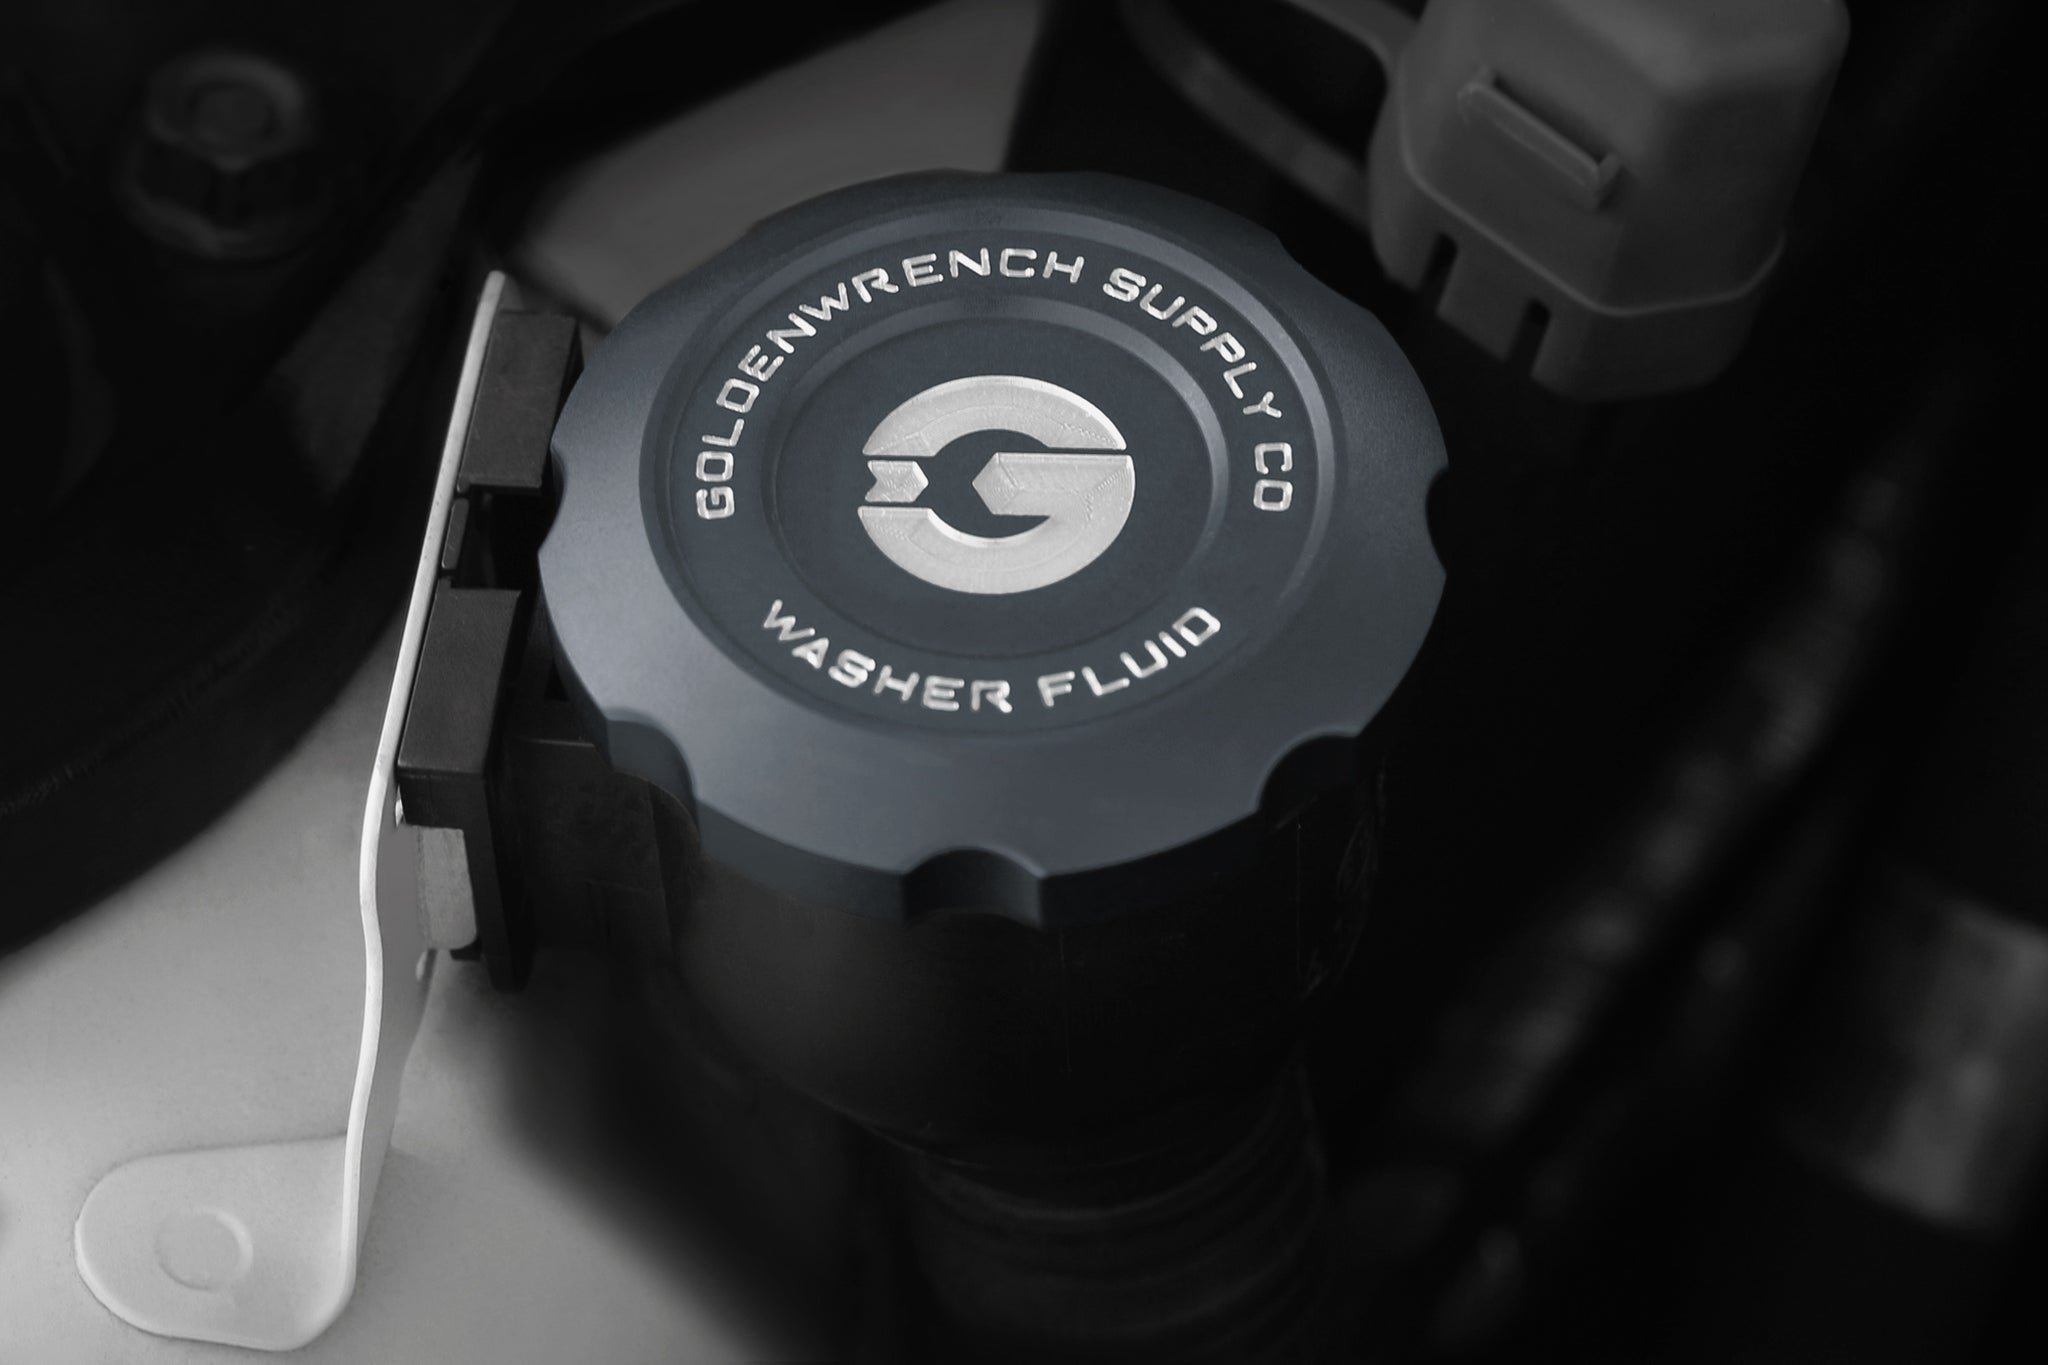 Windshield-Washer Fluid Reservoir Cap 61667264145 For BMW E46 E90 E88 E60  X3 X5(new product launch)